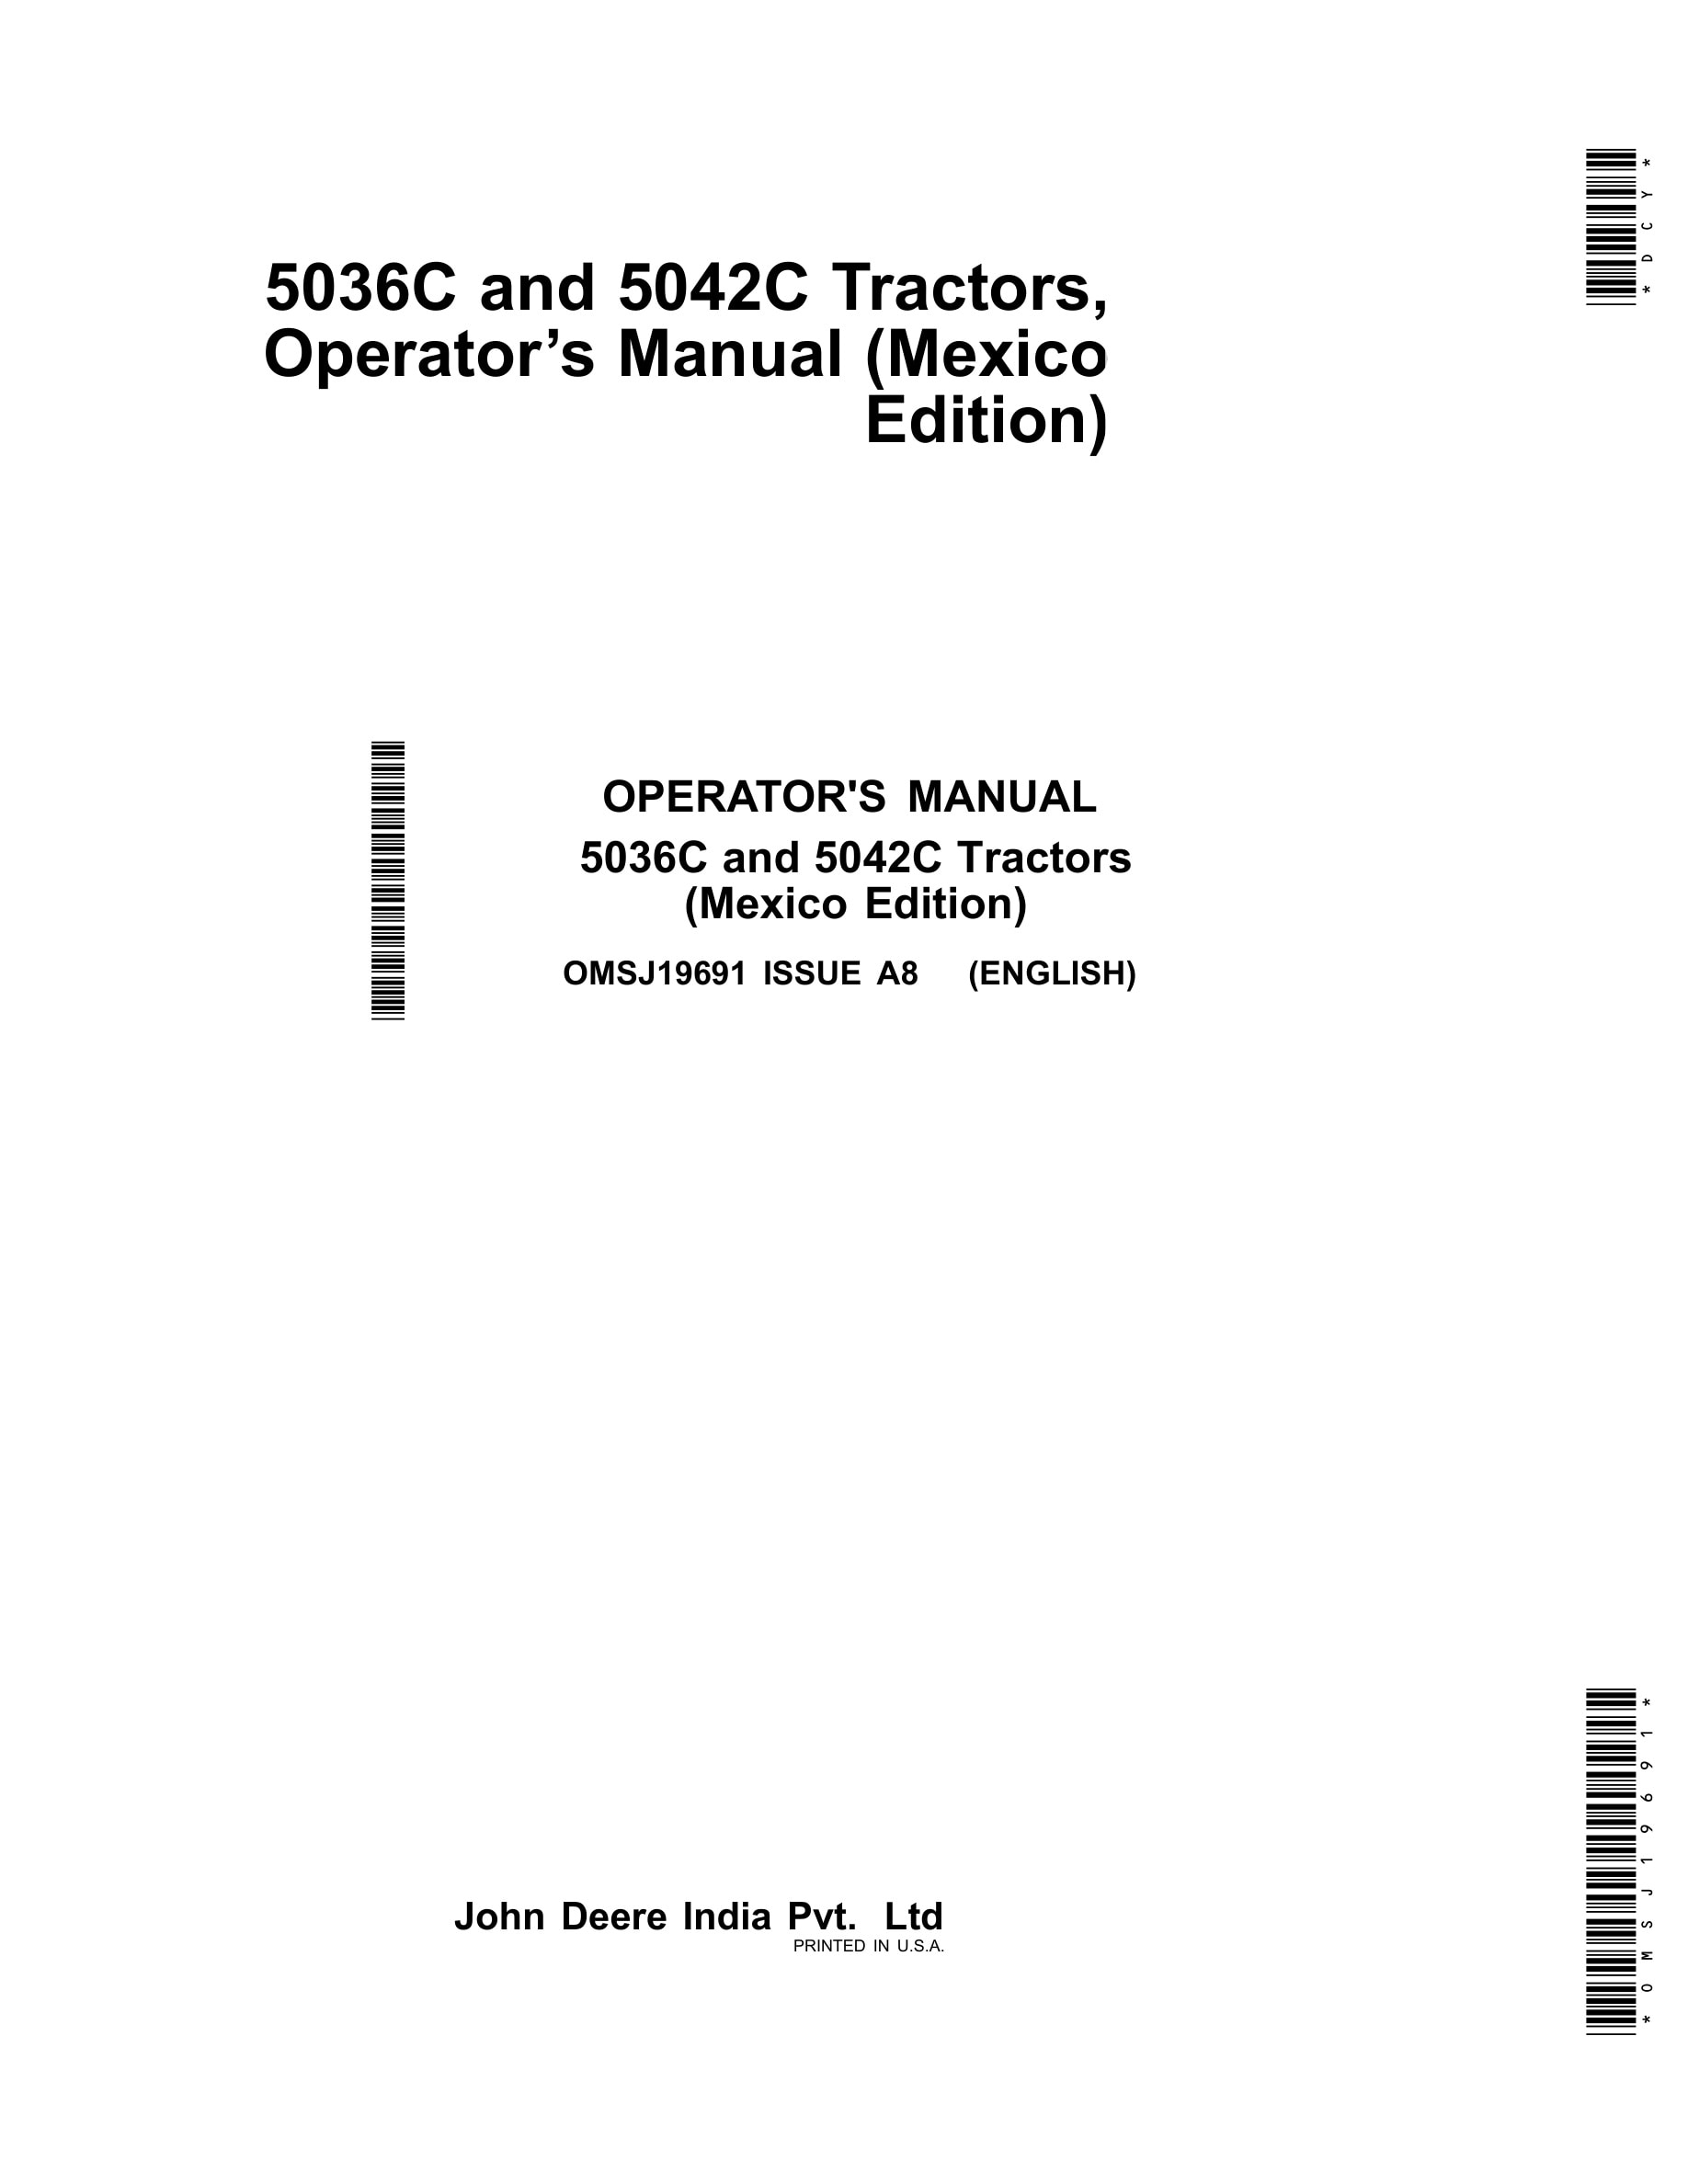 John Deere 5036c And 5042c Tractors Operator Manuals OMSJ19691-1